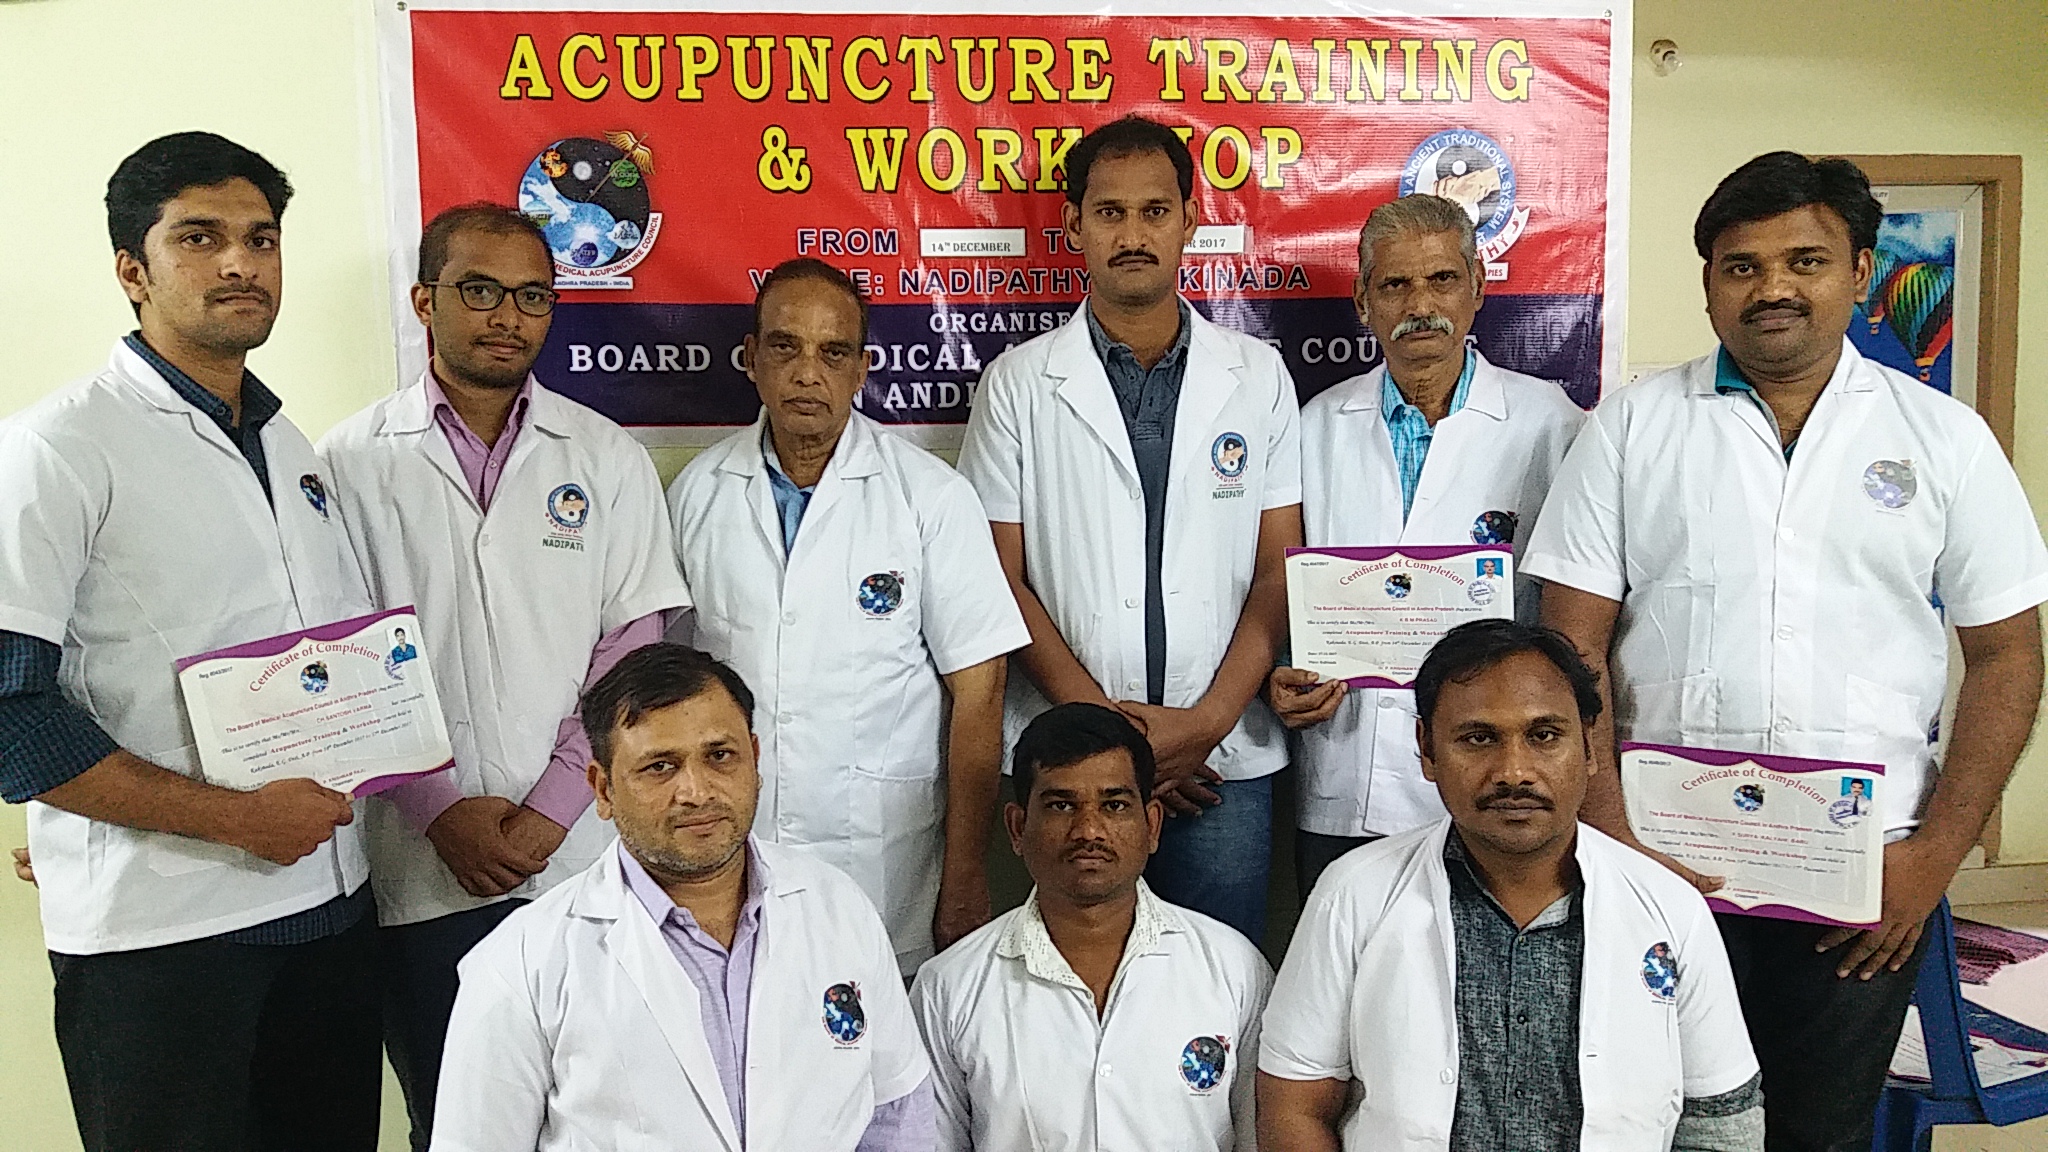 Acupuncture Training &Workshop-3 @Nadipathy